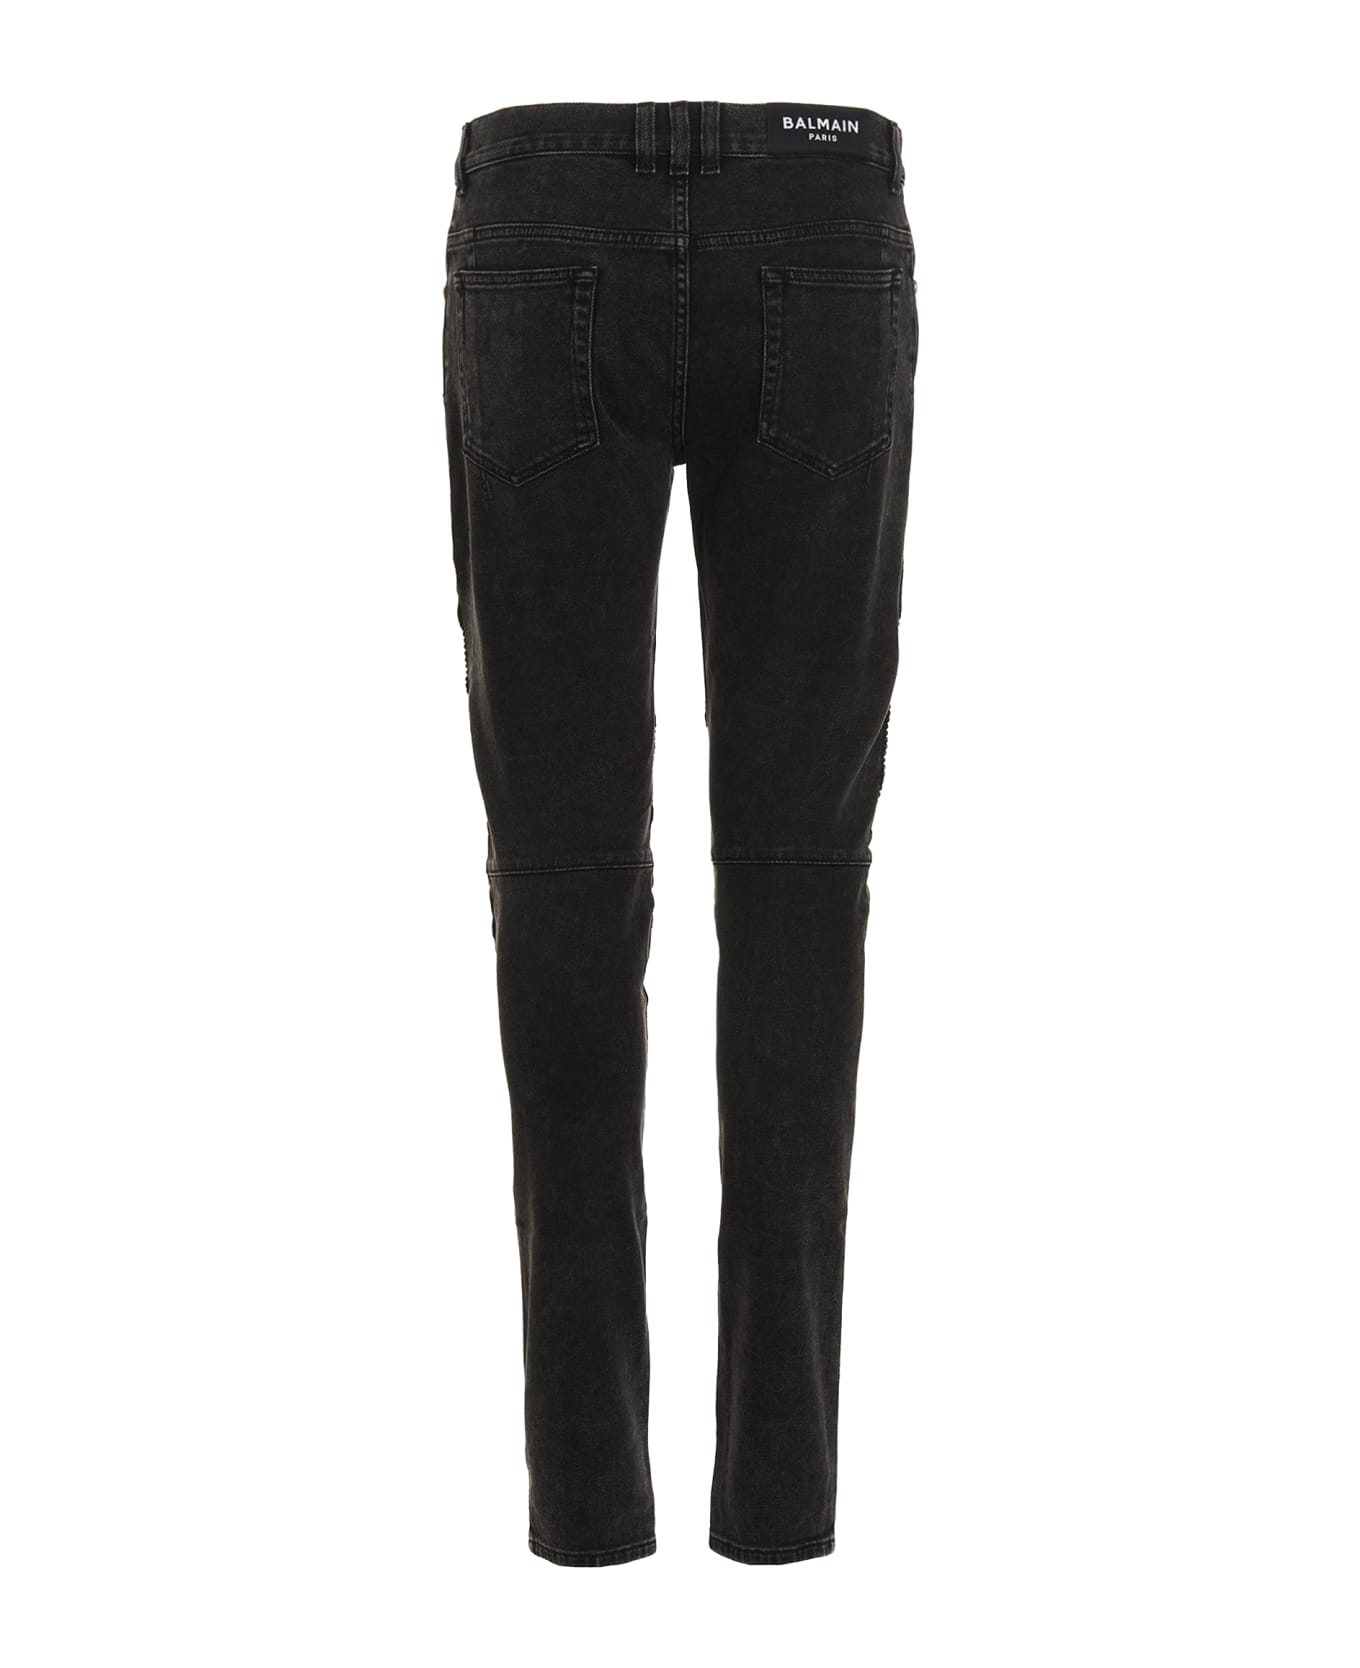 Balmain Zip Detail Jeans - Black  